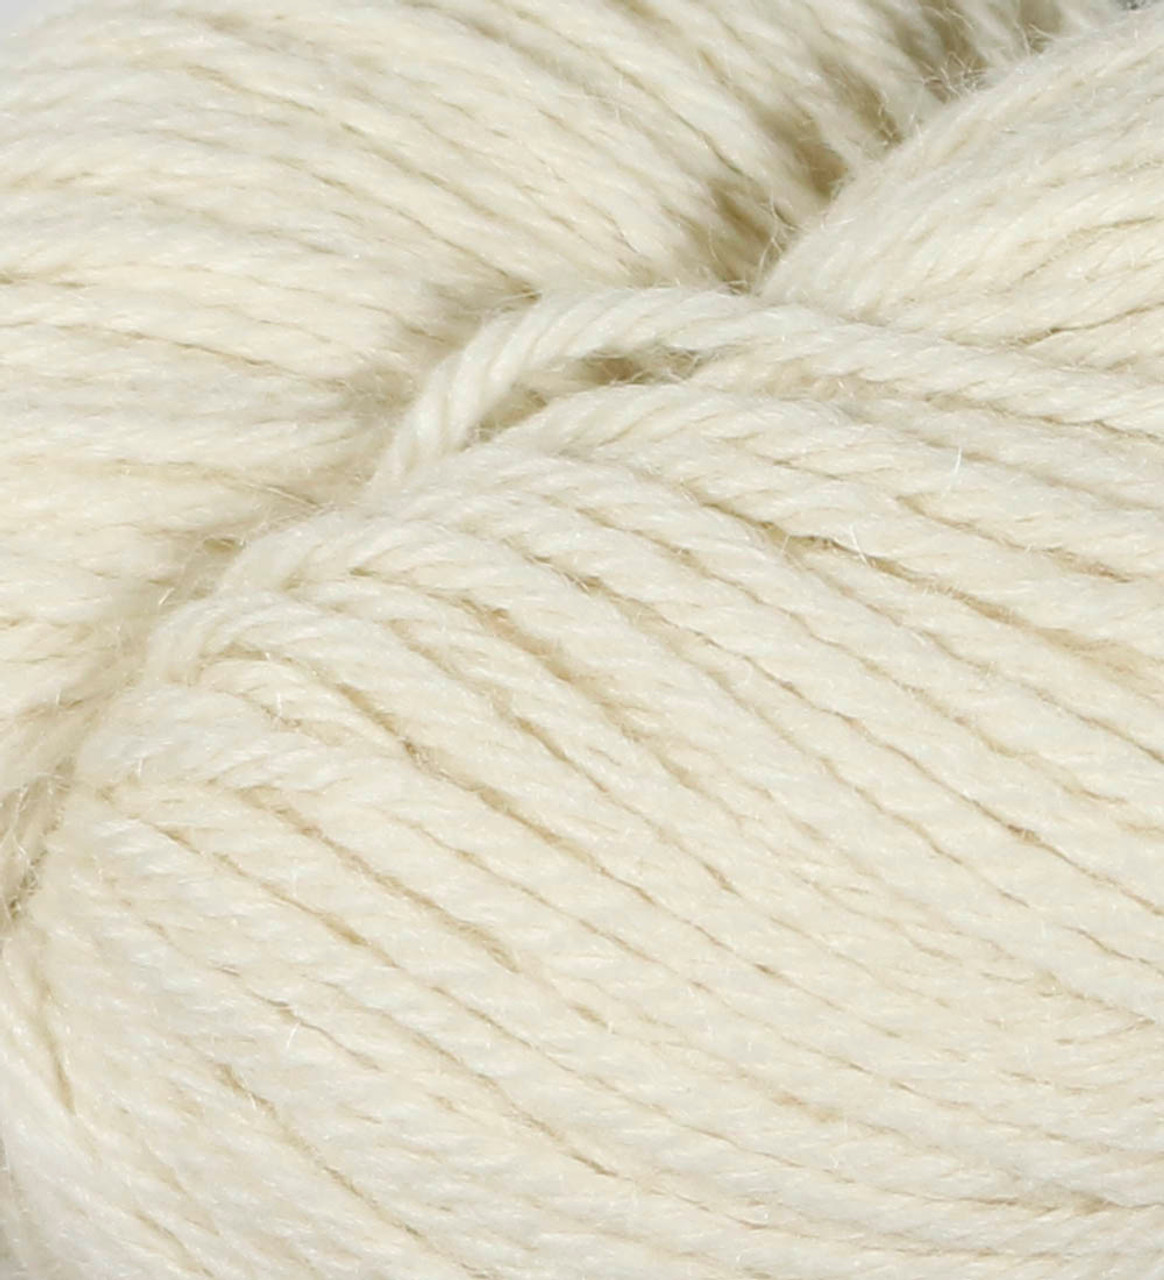 Undyed organic knitting wool hank - Eden Valley Biodynamic Wool